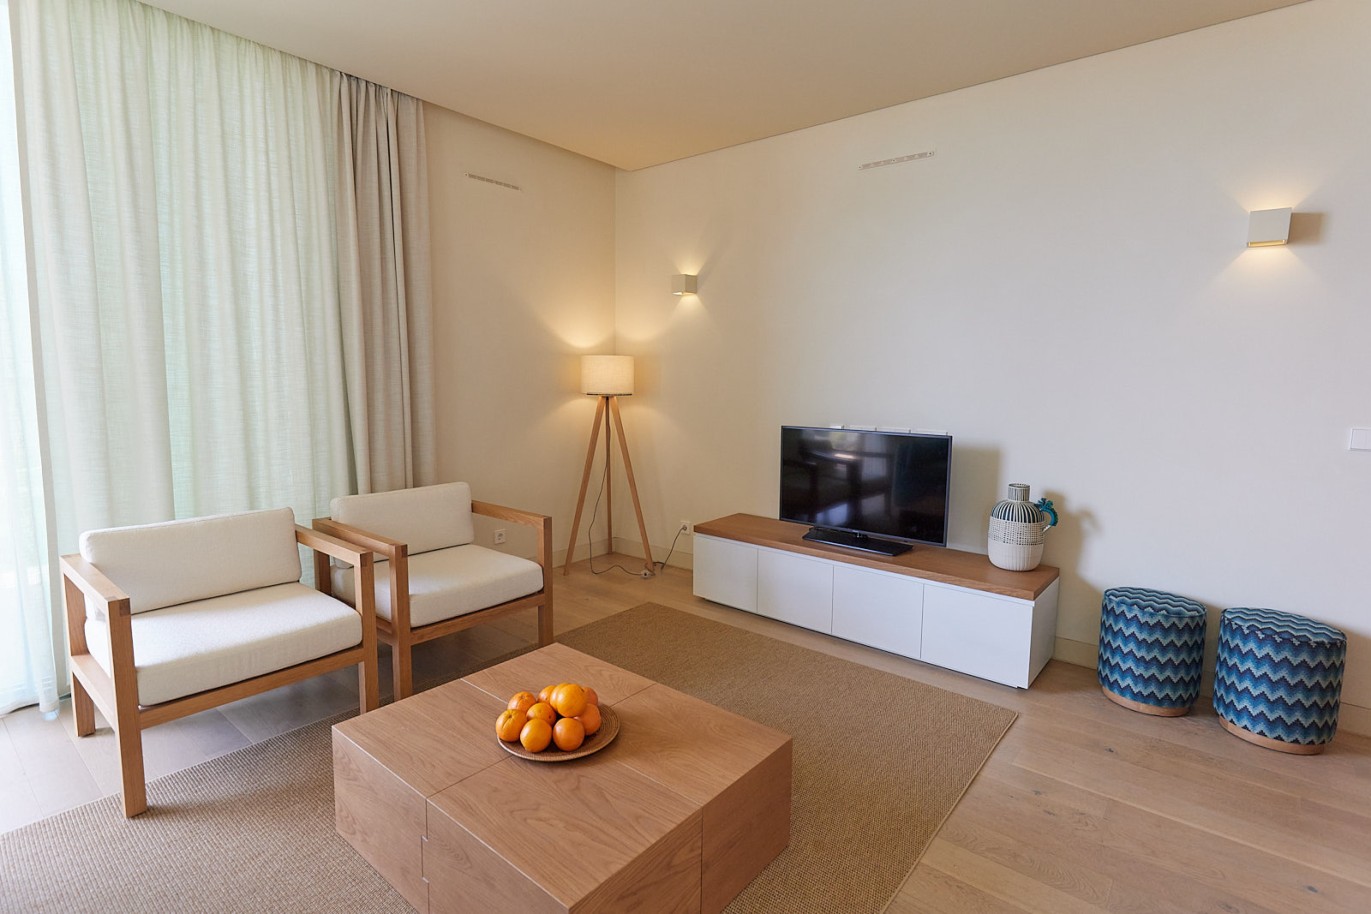 2 bedroom apartment in resort, for sale in Porches, Algarve_230592